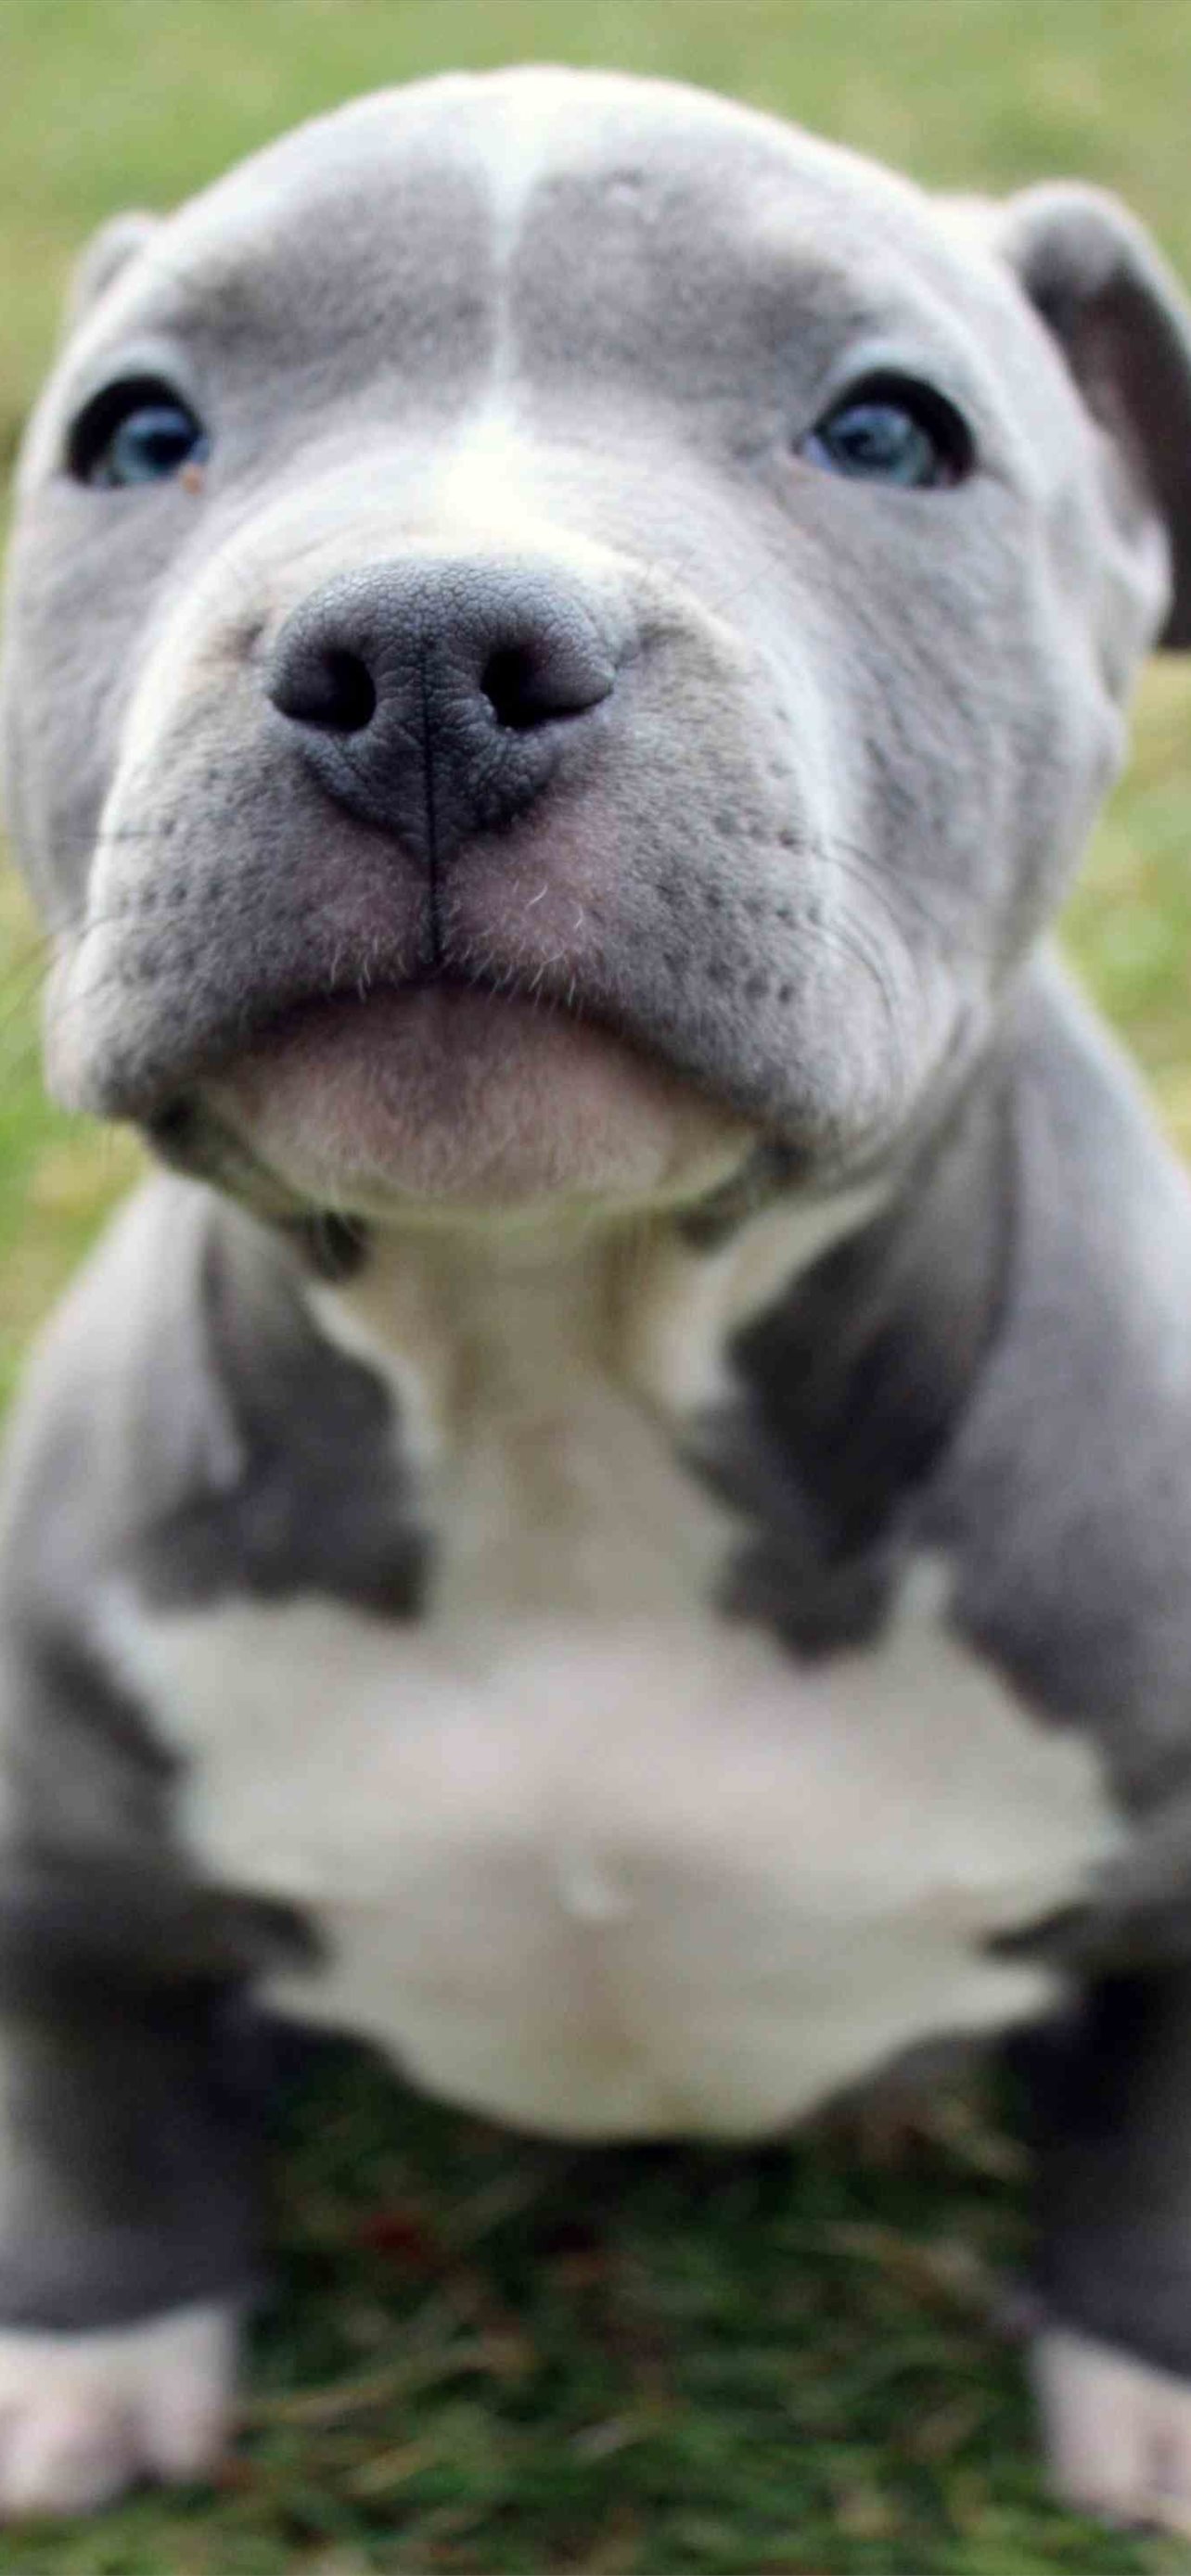 Cute Pitbull Puppies on Dog